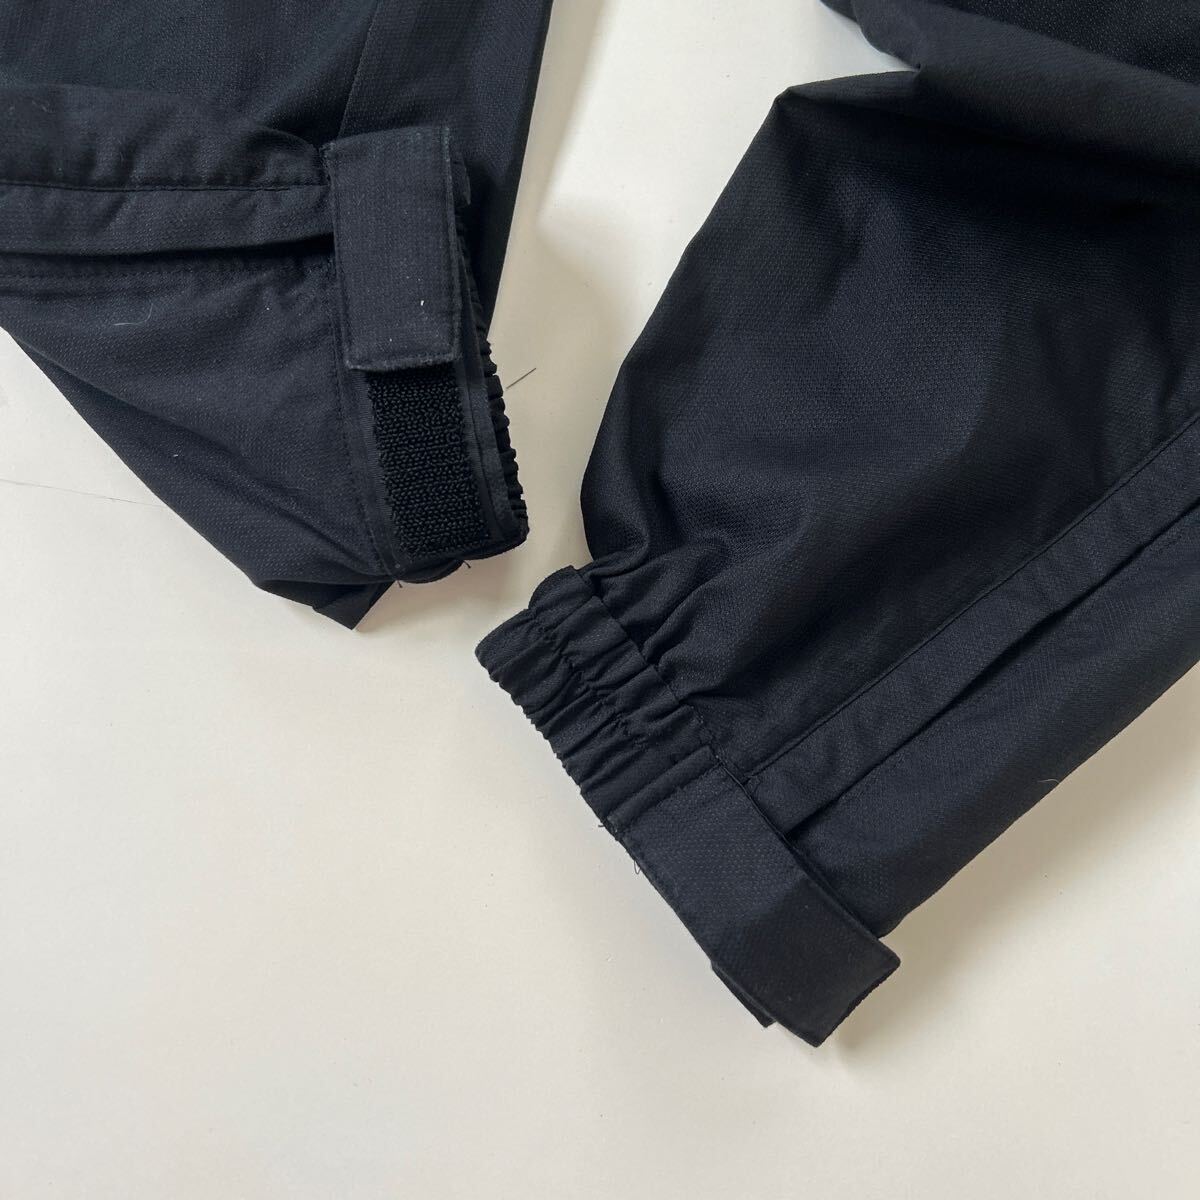  Gamakatsu summer dry брюки M размер 